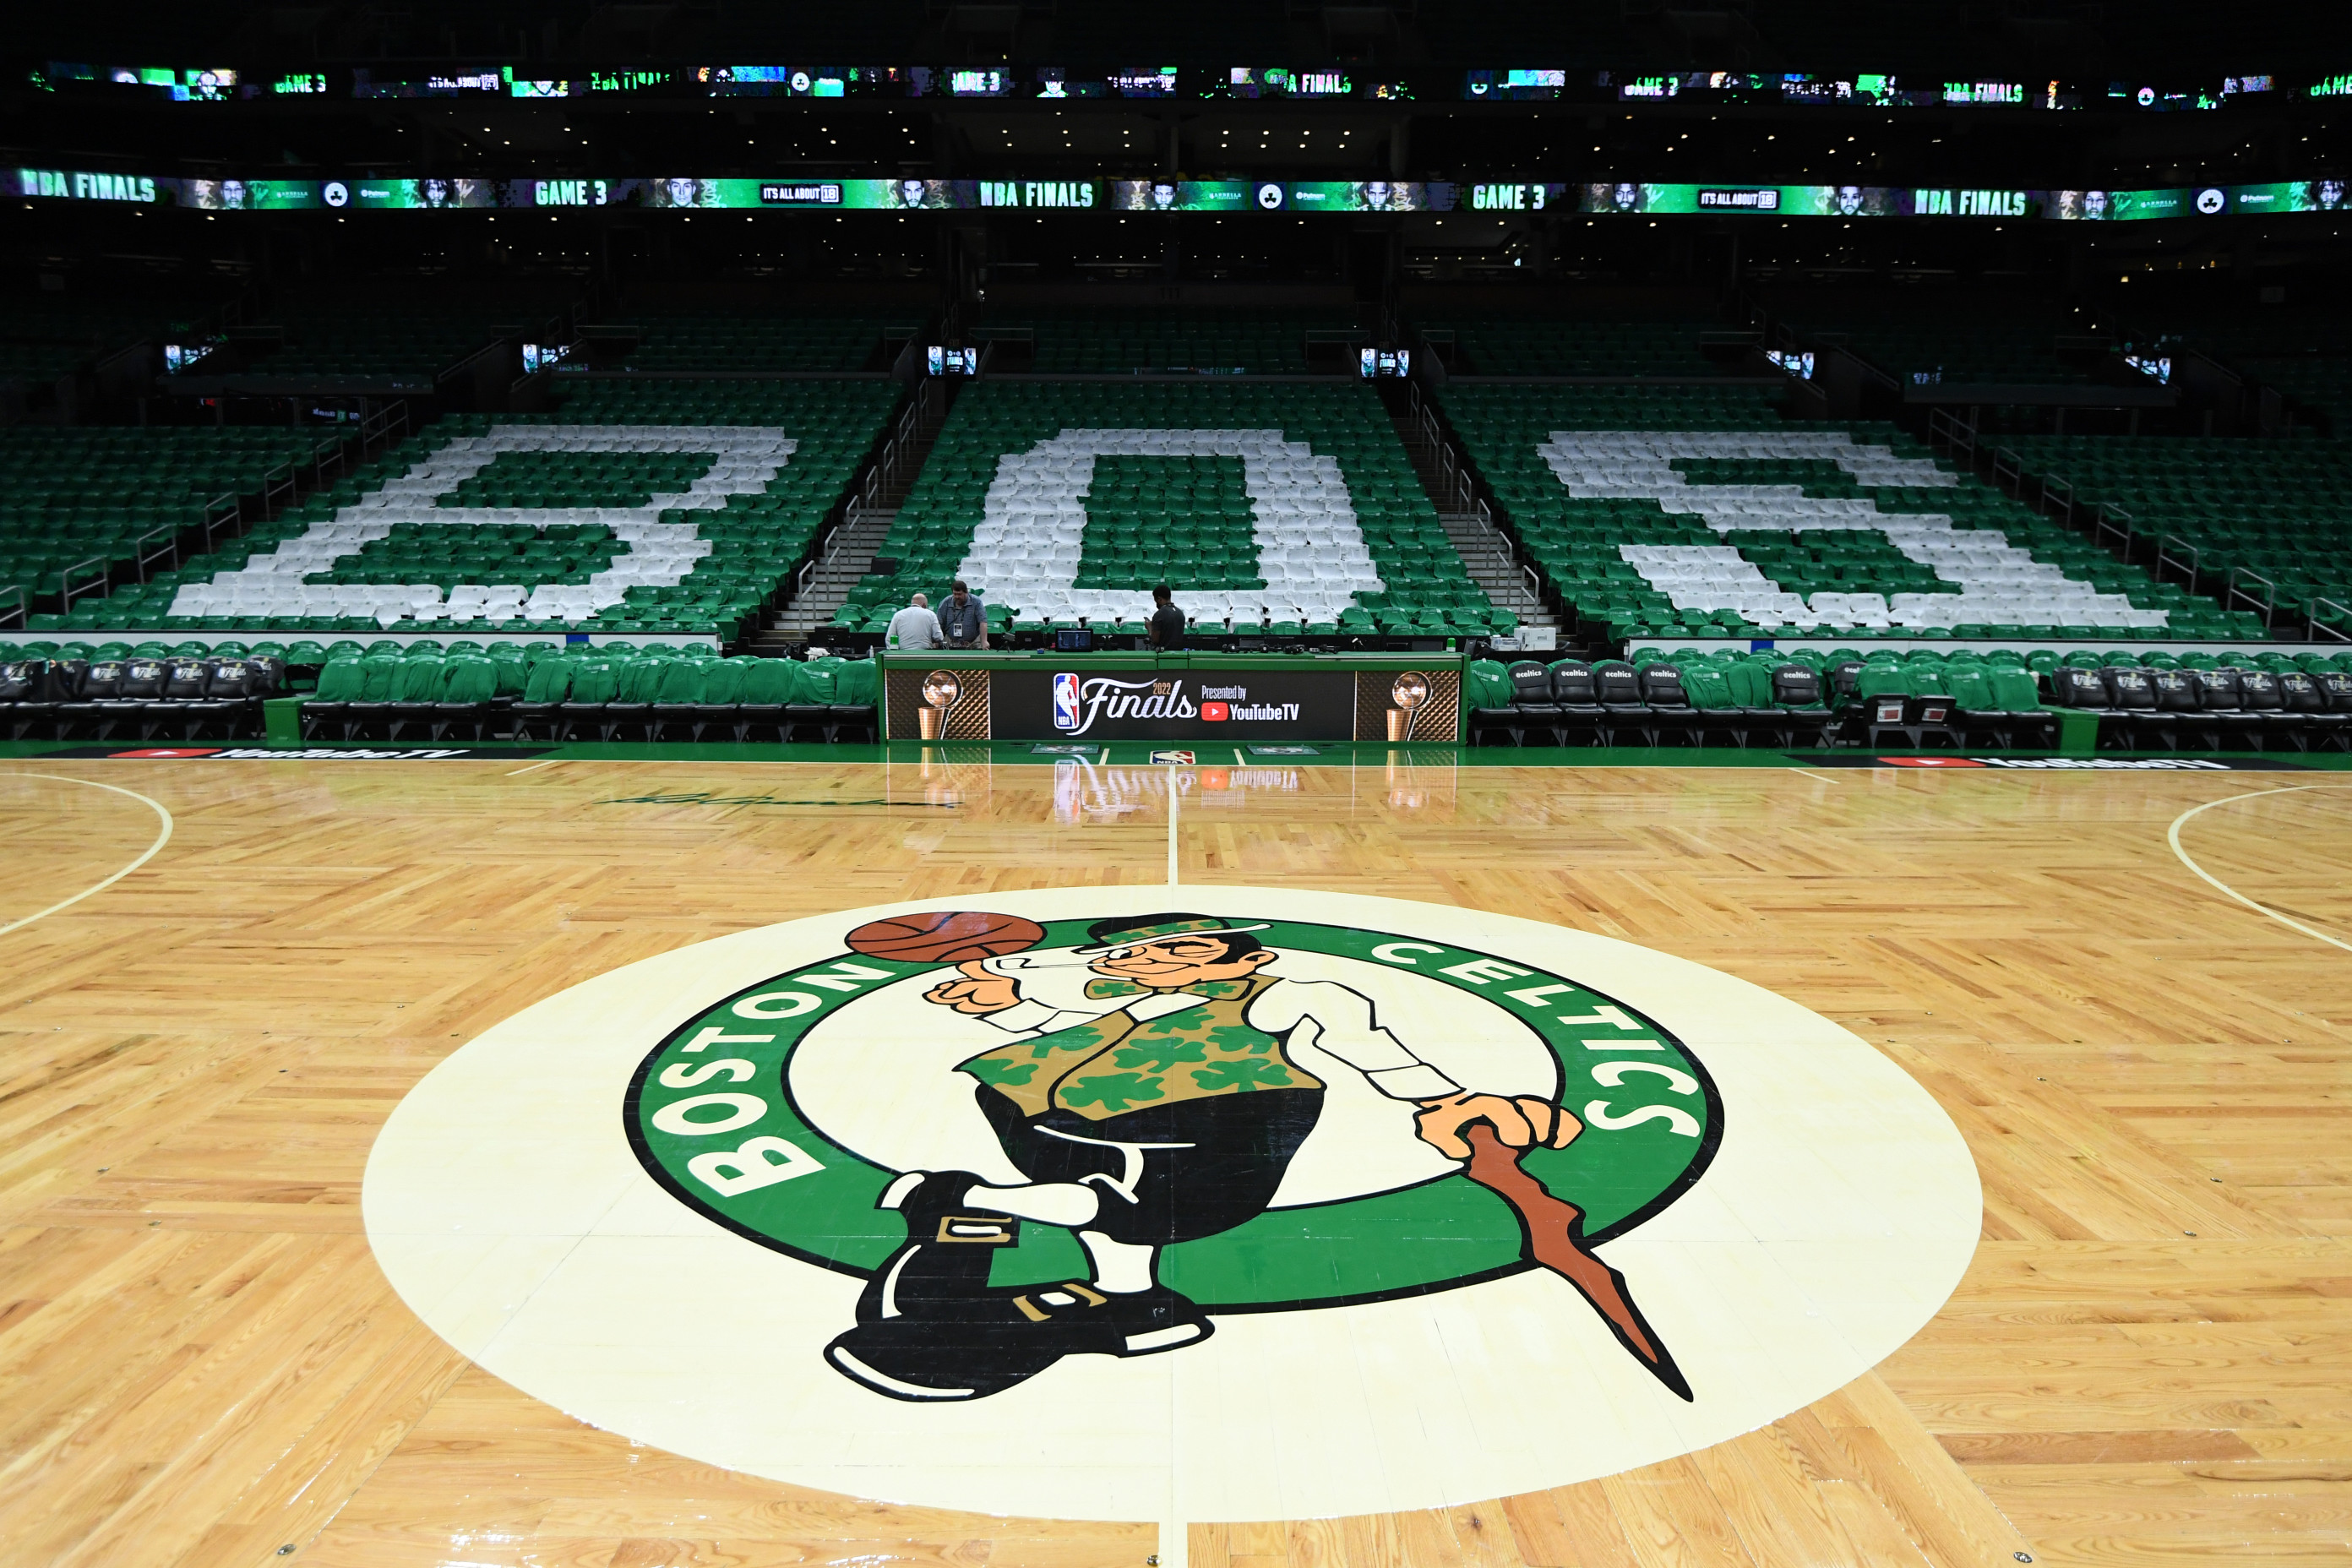 Boston Garden: the greenest of the NBA